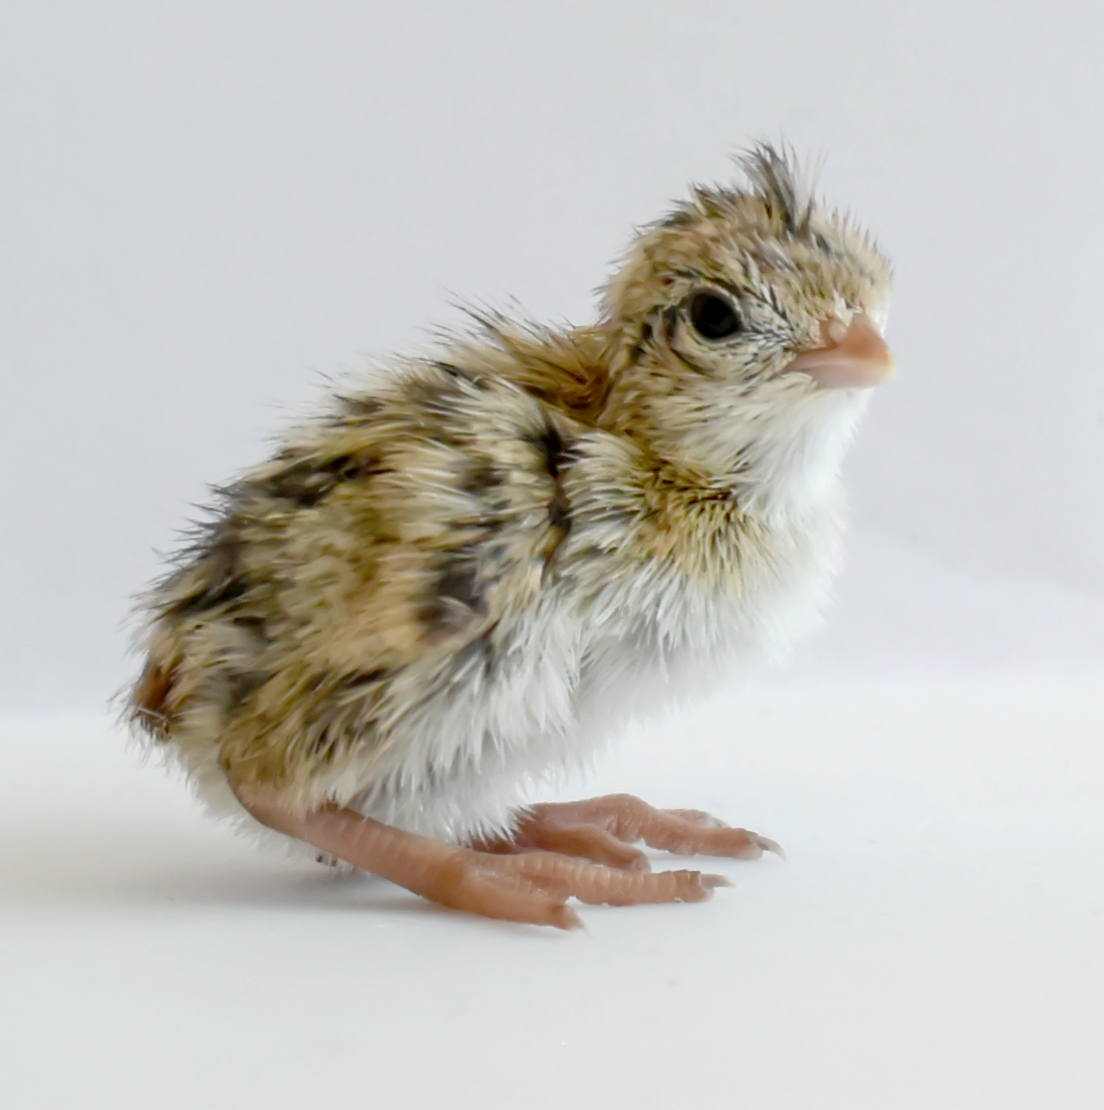 A quail chick